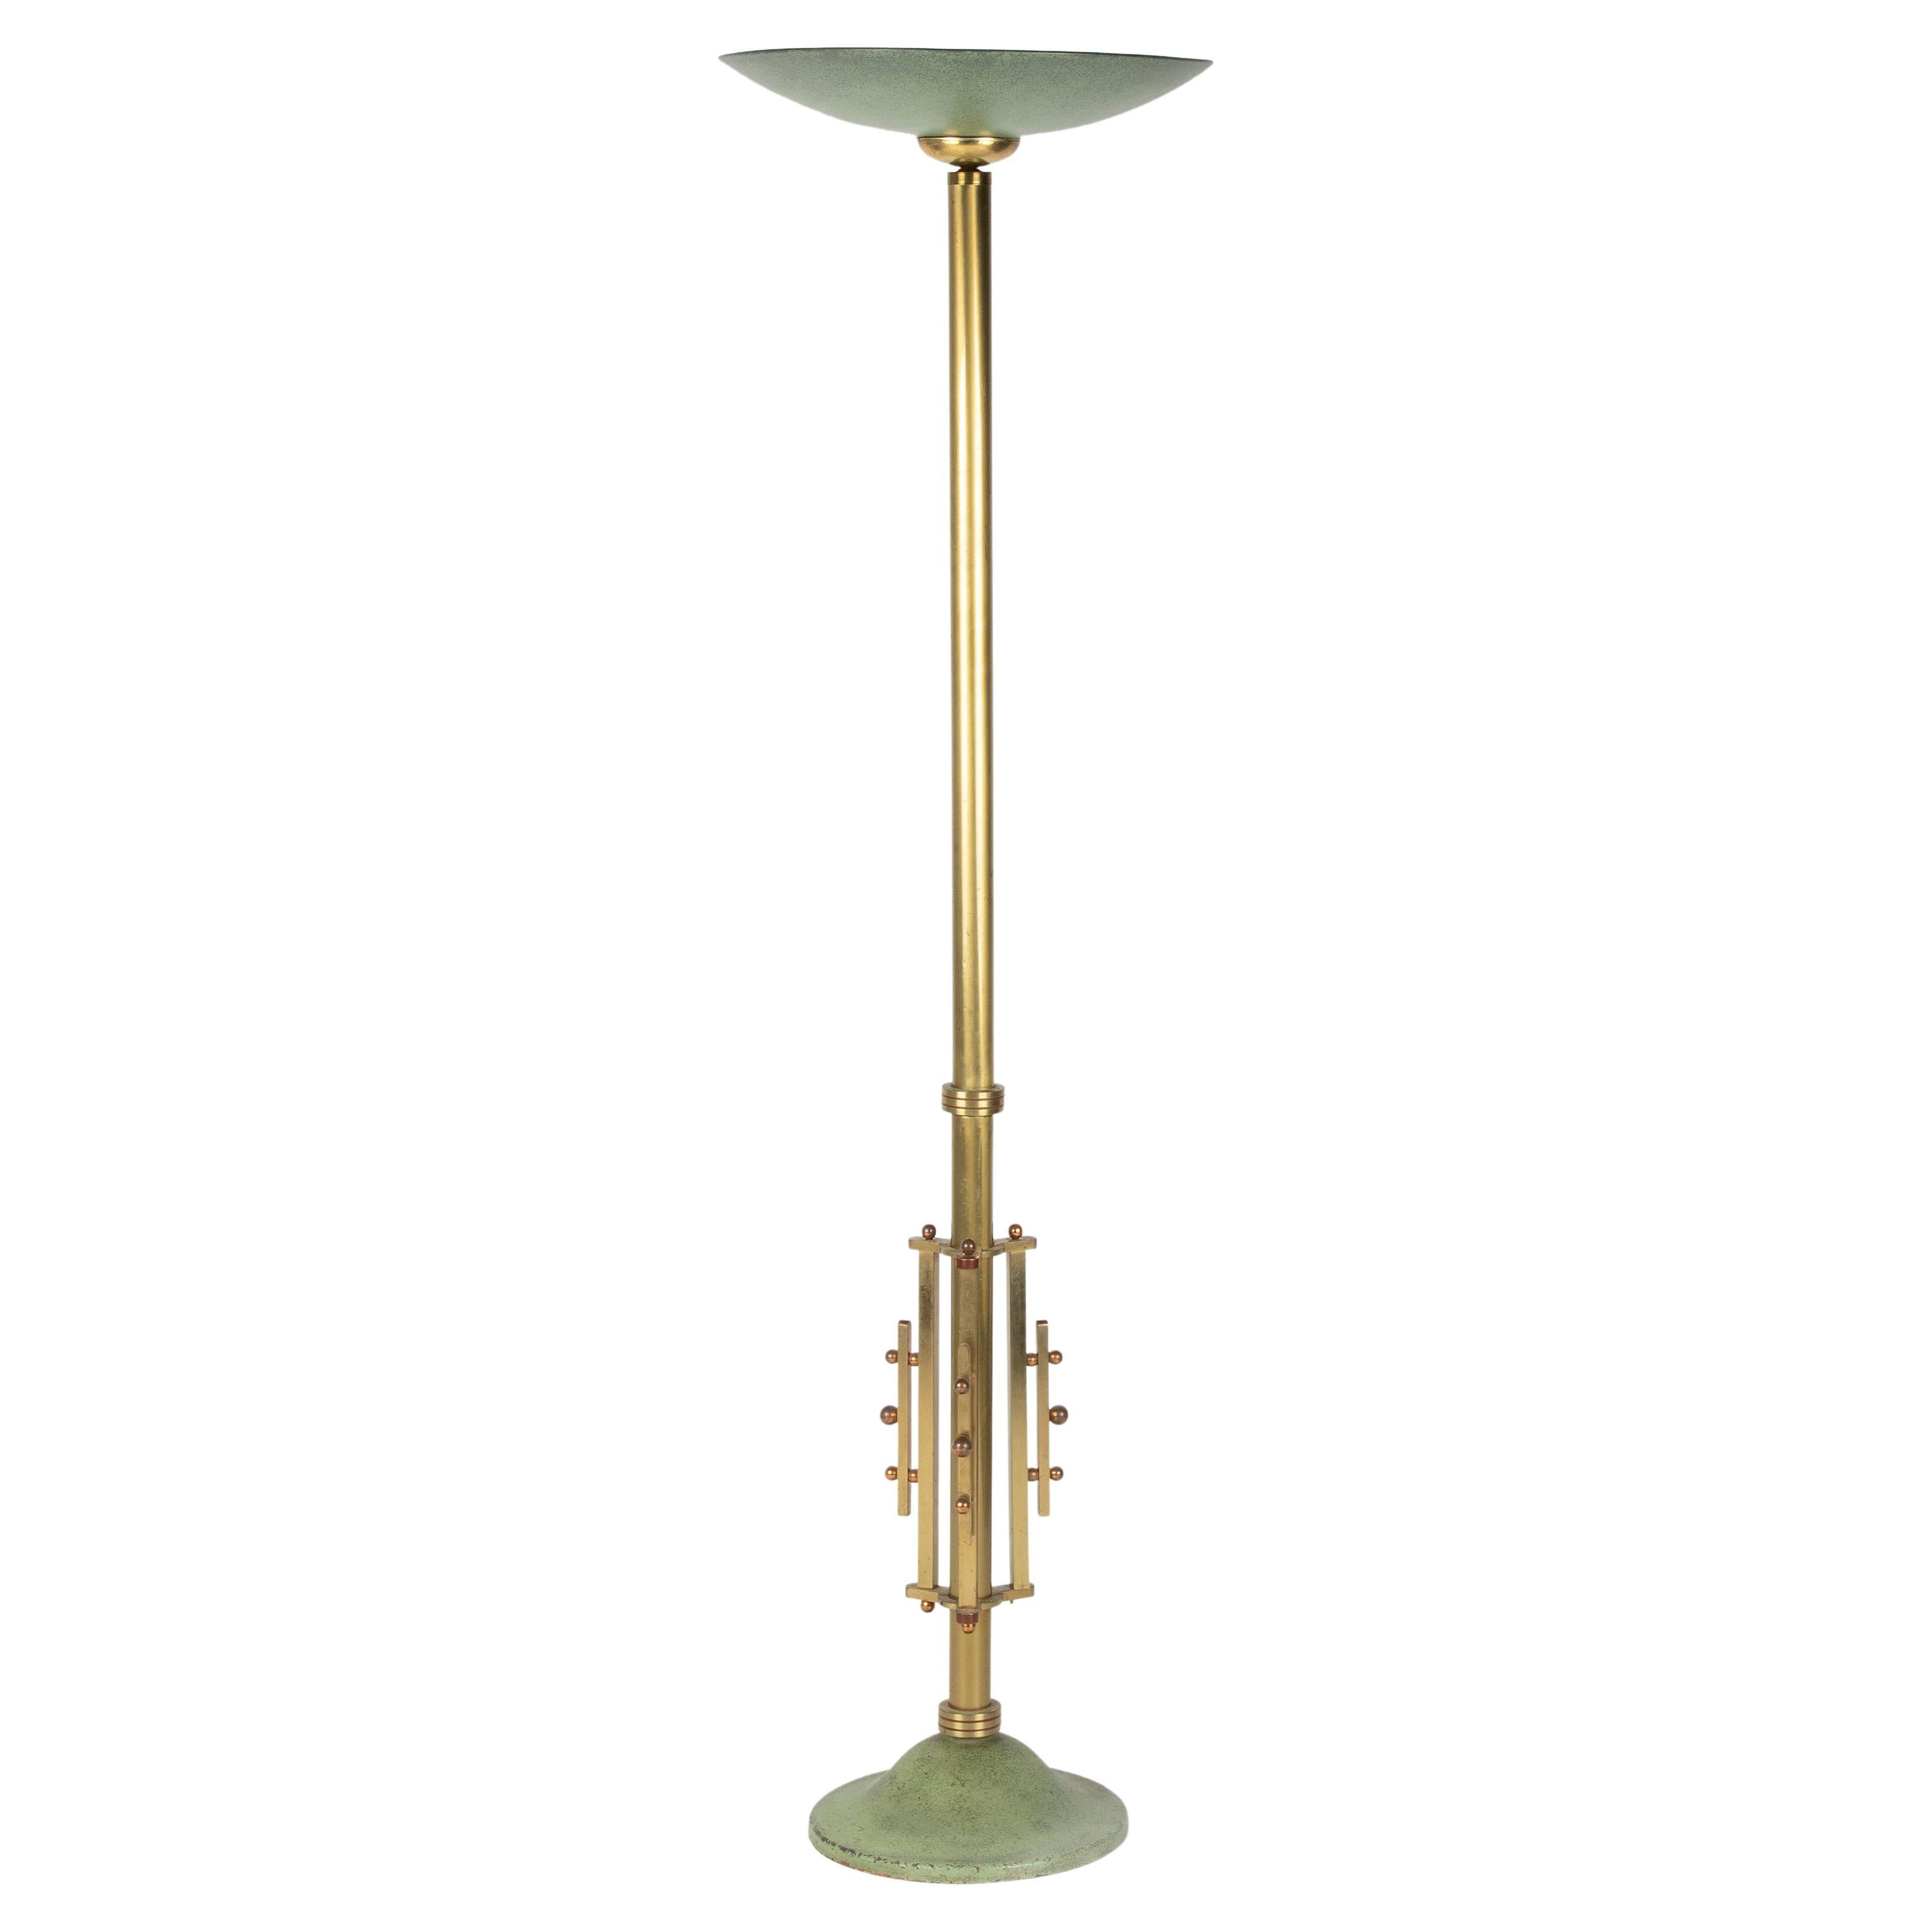 Early 20th Century Art Deco Floor Lamp